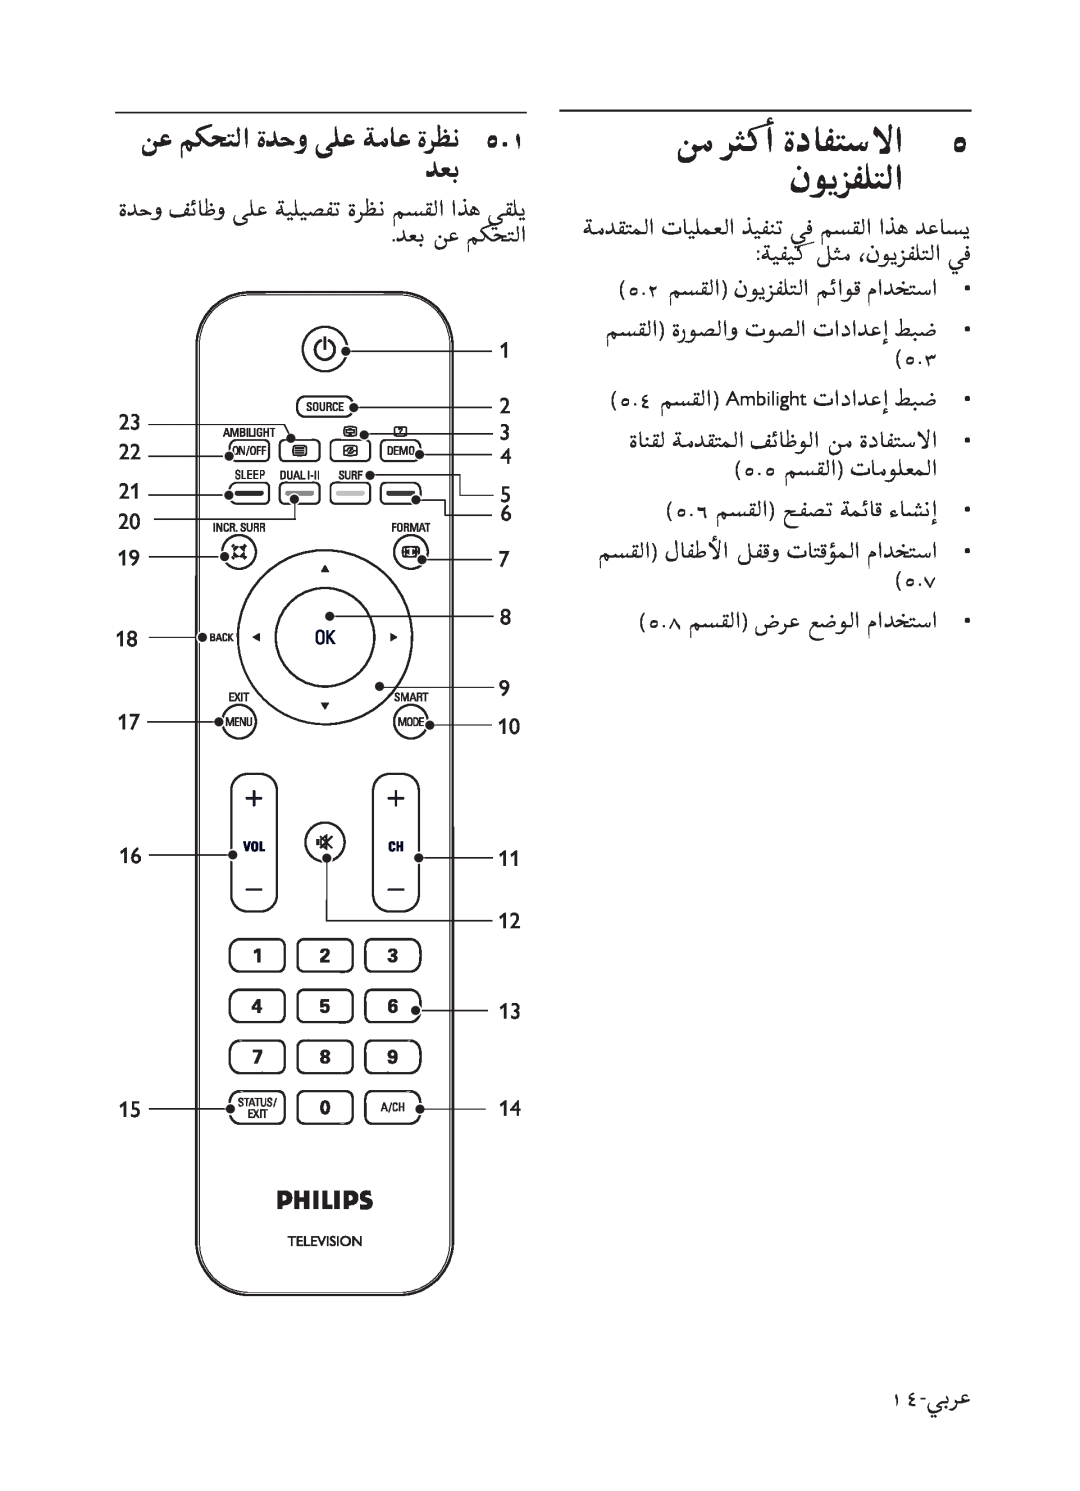 Philips 52PFL7803 user manual ﻦﻣ ﺮﺜﻛﺃ ﺓﺩﺎﻔﺘﺳﻻﺍ, ﻥﻮﻳﺰﻔﻠﺘﻟﺍ, ﻦﻋ ﻢﻜﺤﺘﻟﺍ ﺓﺪﺣﻭ ﻰﻠﻋ ﺔﻣﺎﻋ ﺓﺮﻈﻧ 